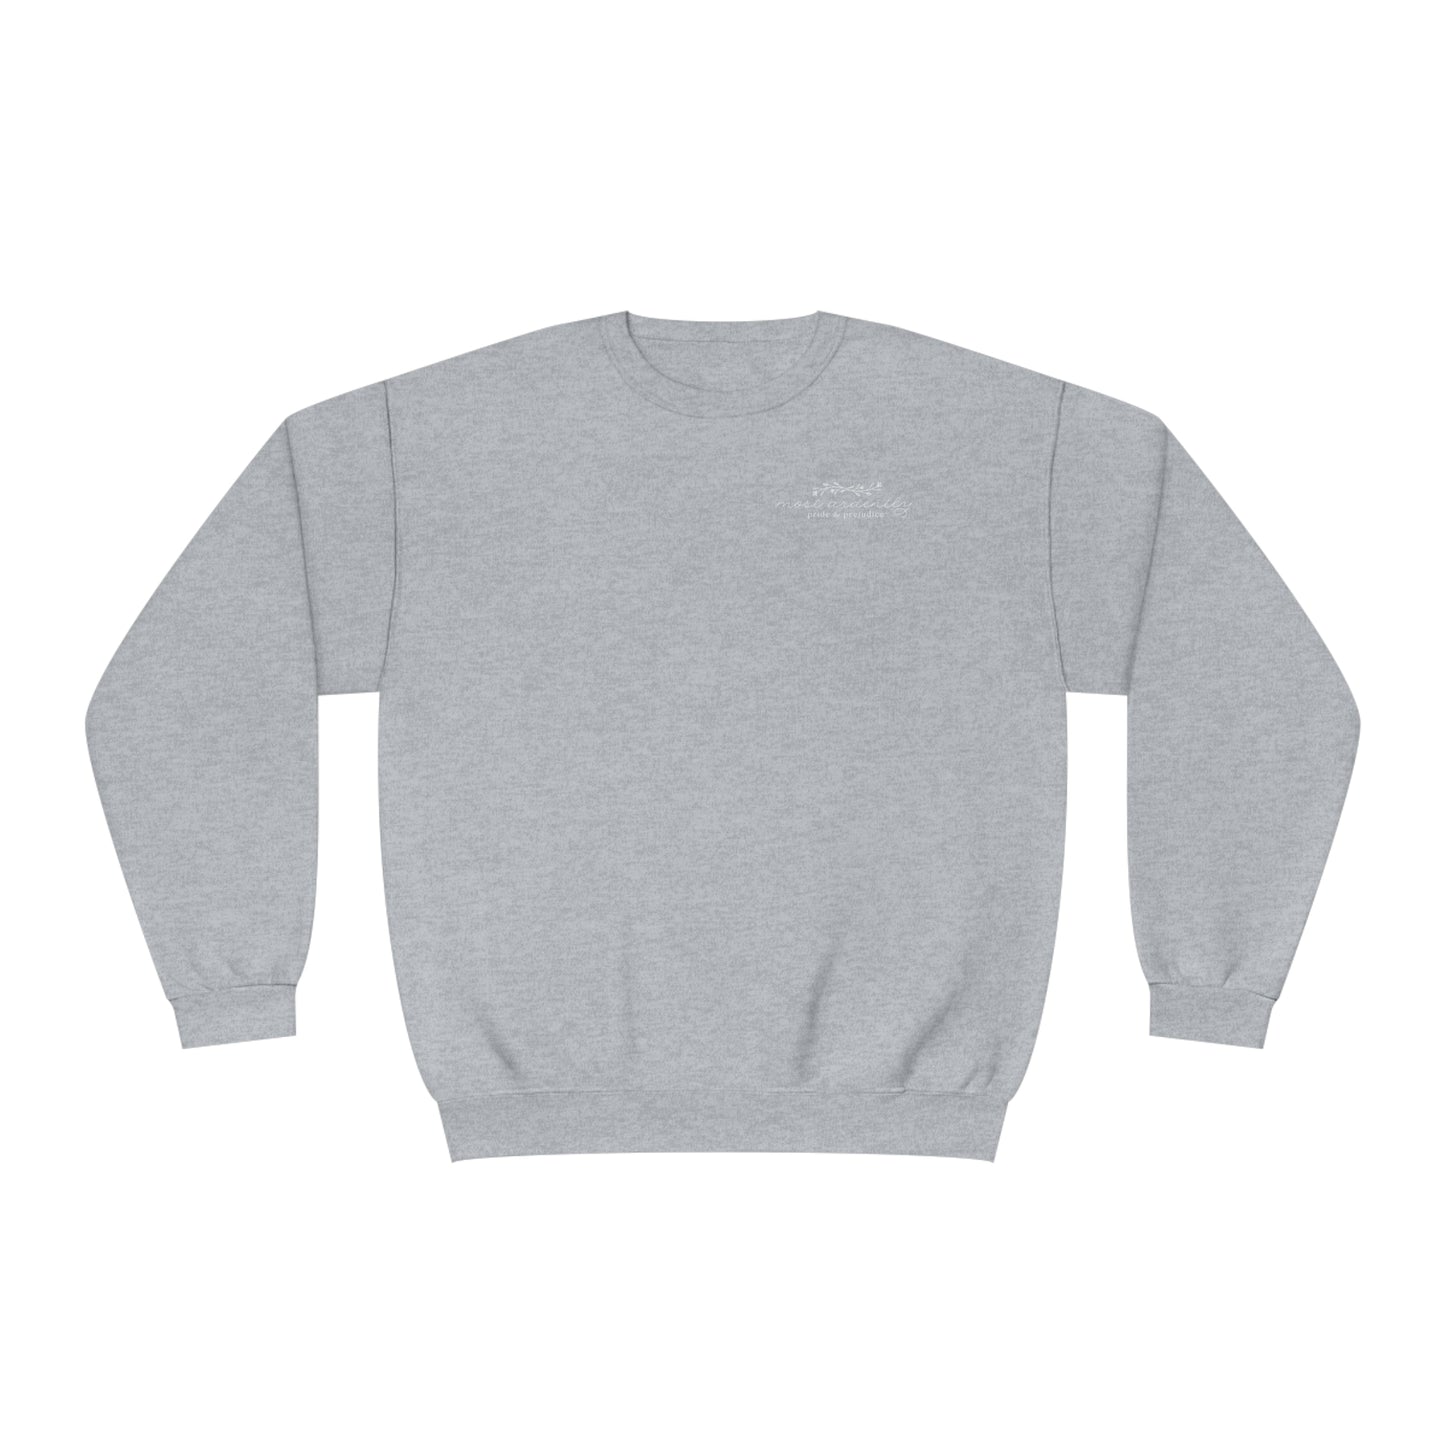 Sweatshirt:  Jane Austen "most ardently" Crewneck Sweatshirt